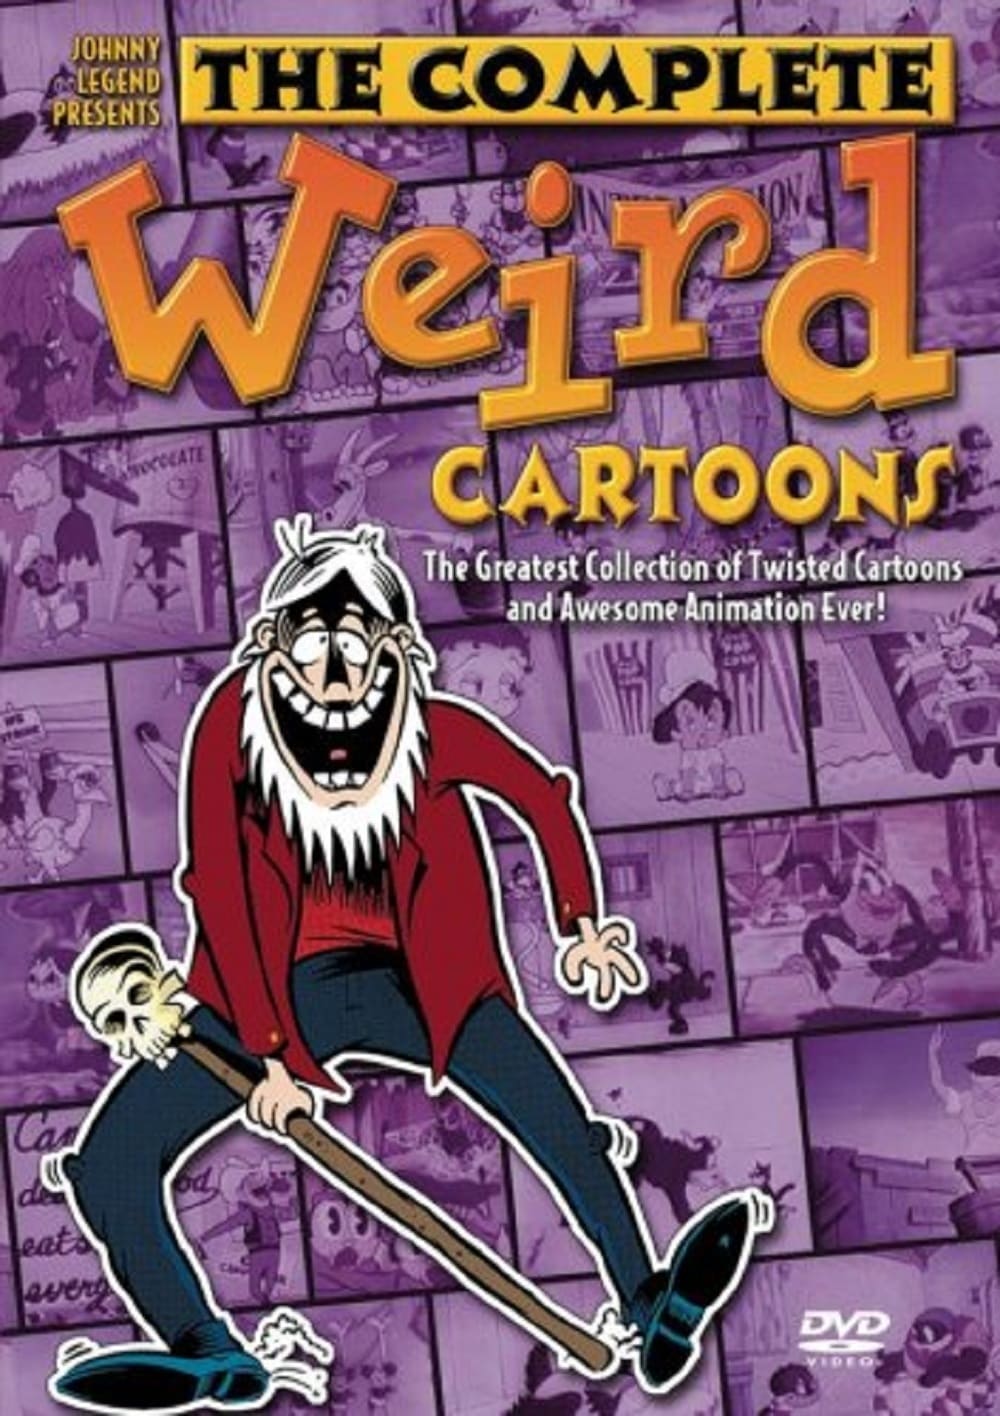 Johnny Legend Presents: The Complete Weird Cartoons (2004)